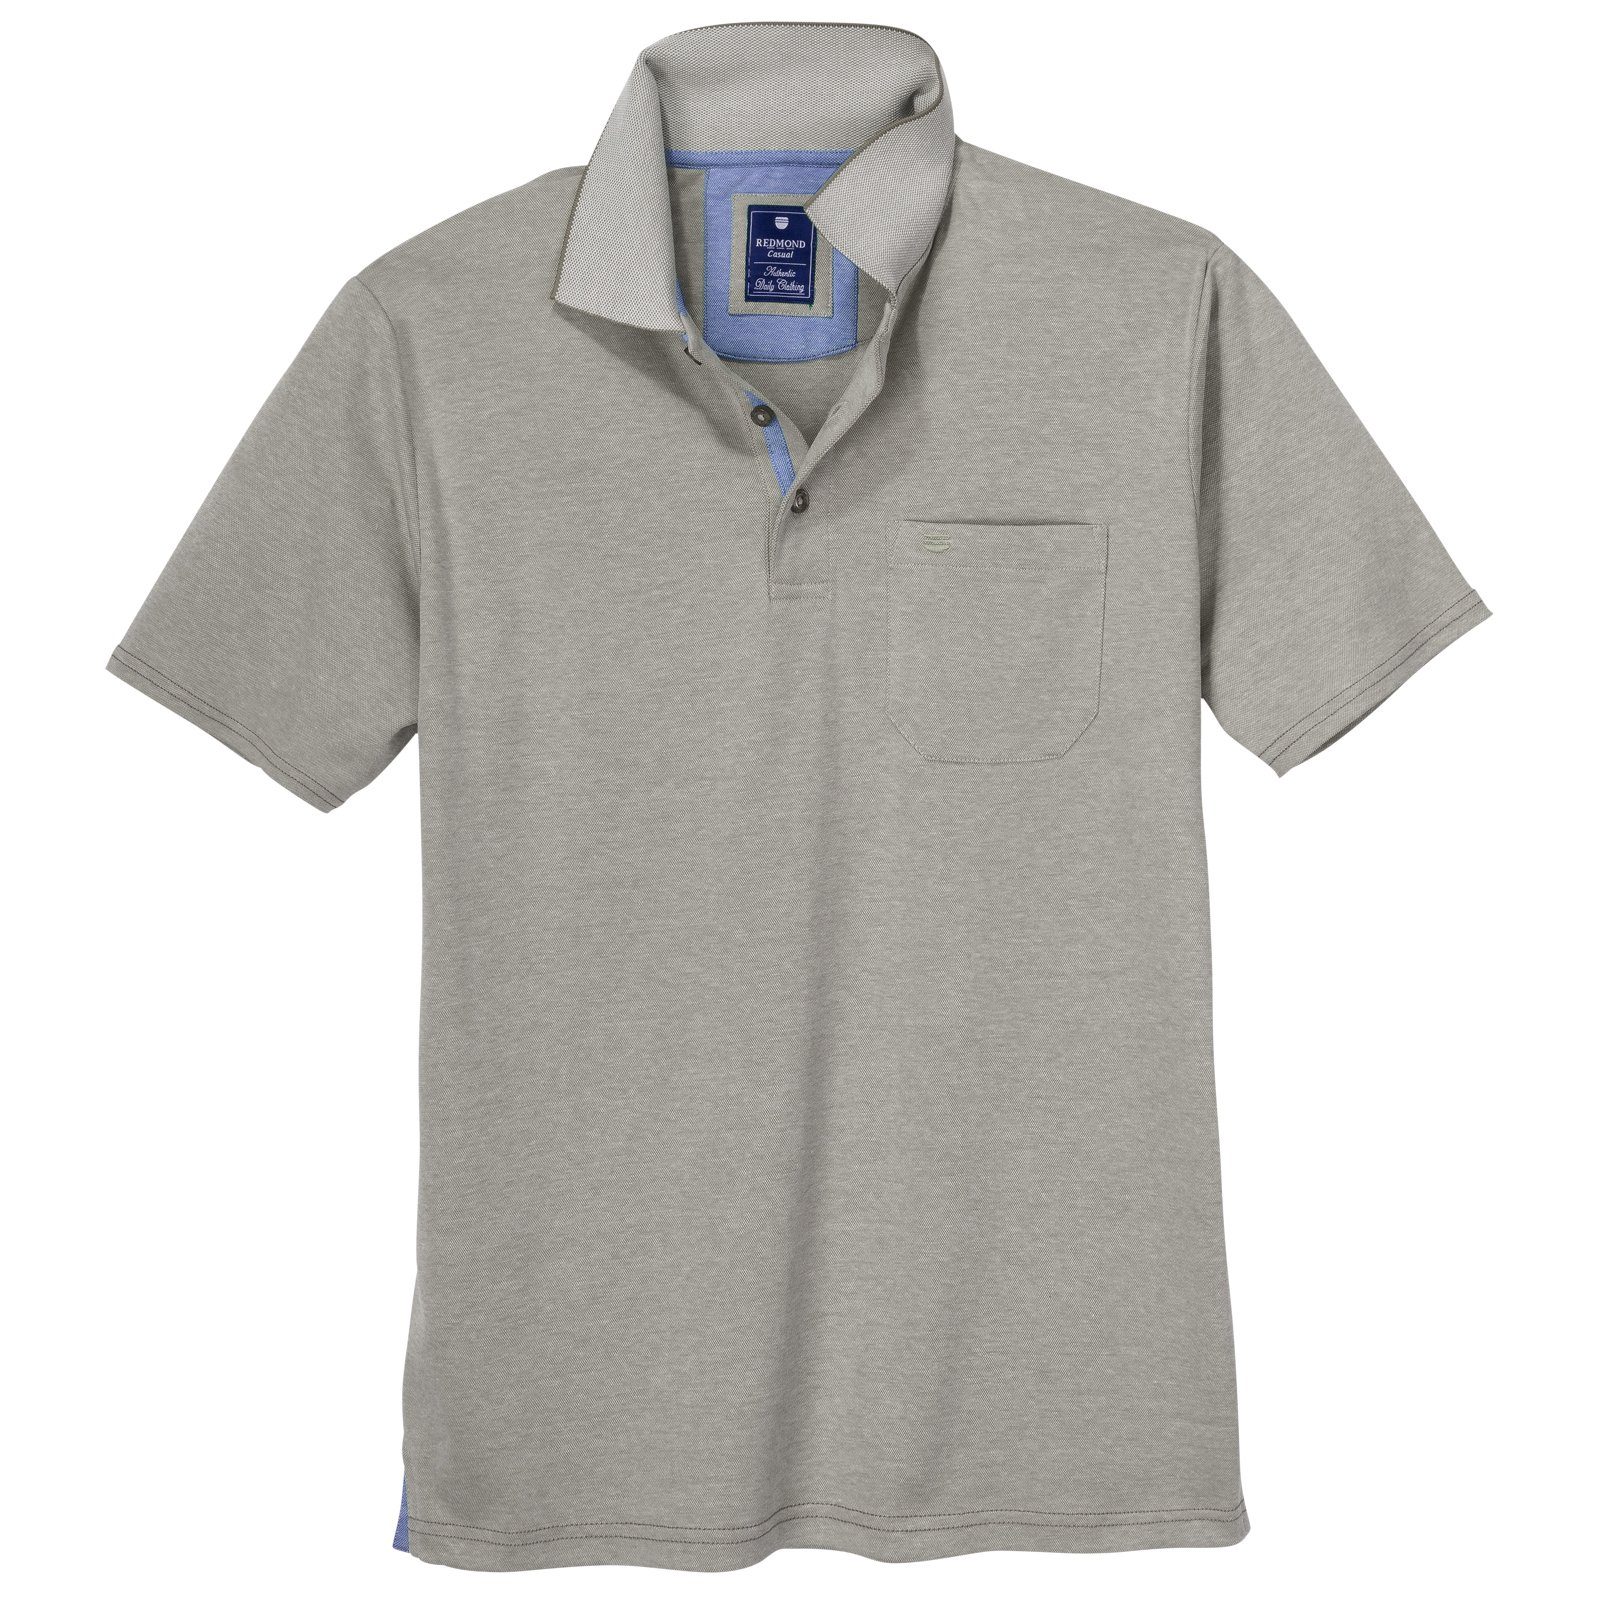 Redmond Poloshirt Große Größen Poloshirt braun melange "Wash & Wear" Redmond | Poloshirts